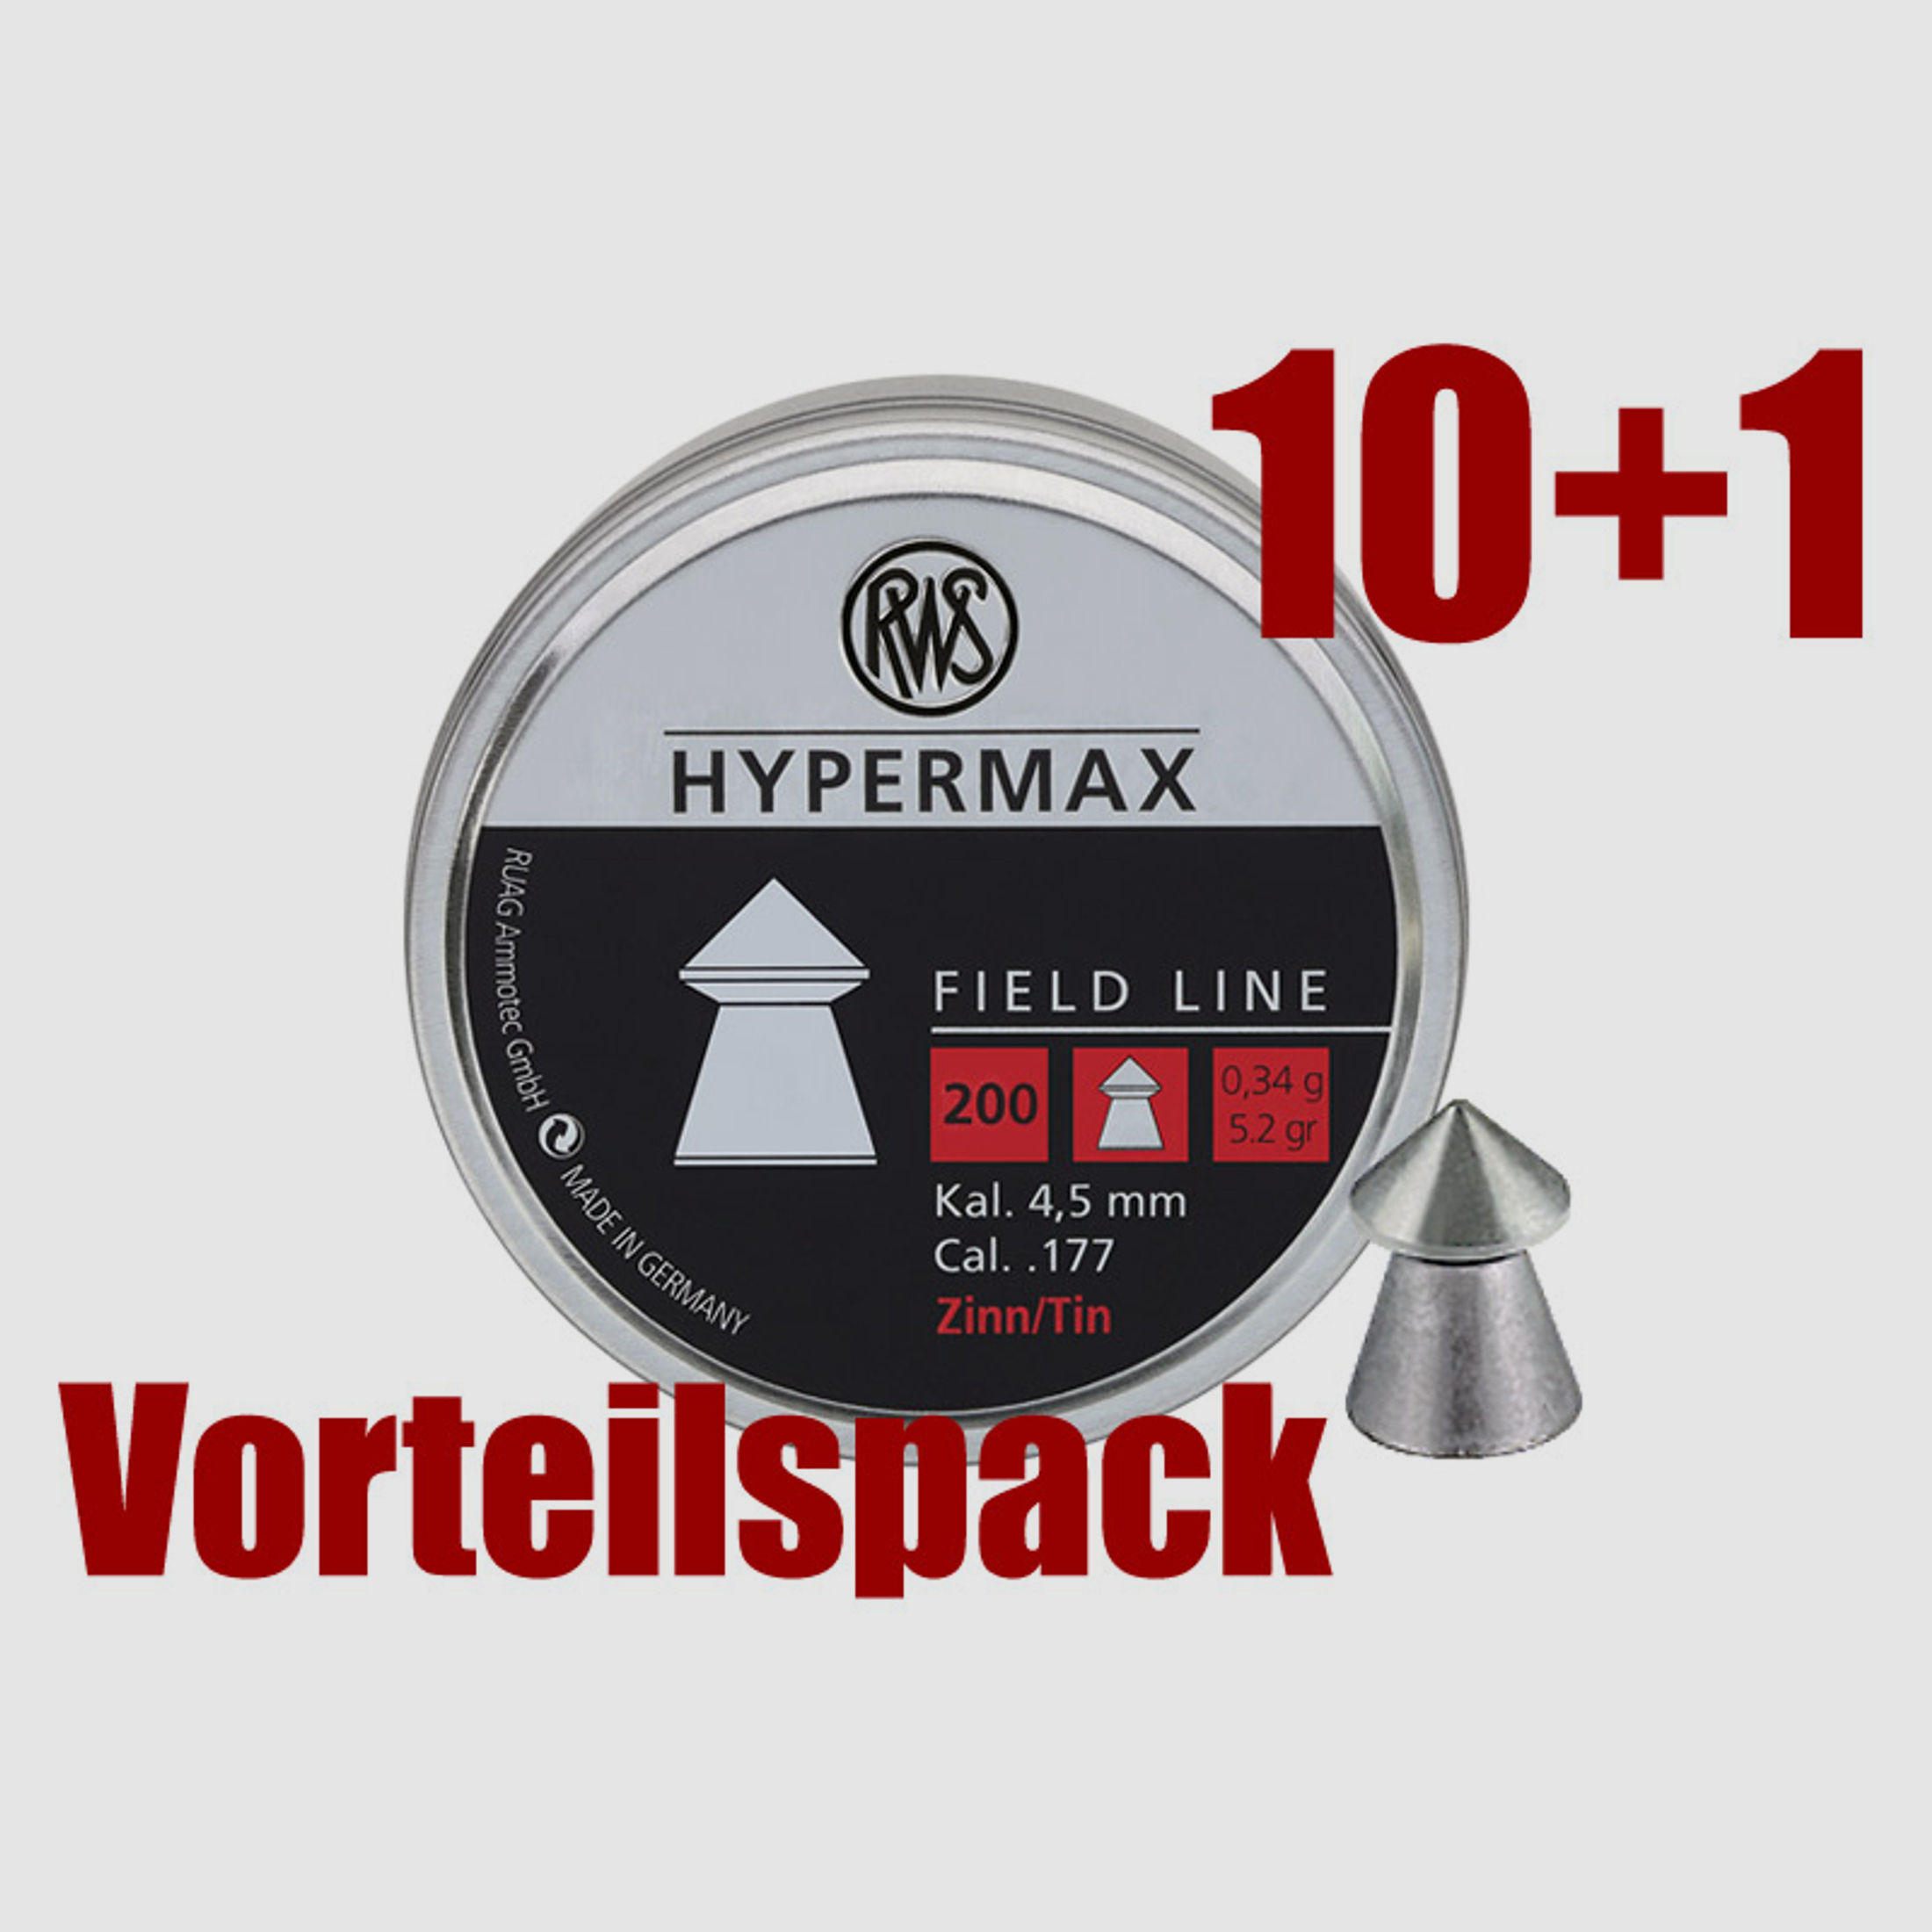 Vorteilspack 10+1 Spitzkopf Diabolos RWS Hypermax Kaliber 4,5 mm 0,34 g glatt bleifrei 11 x 200 StĂĽck